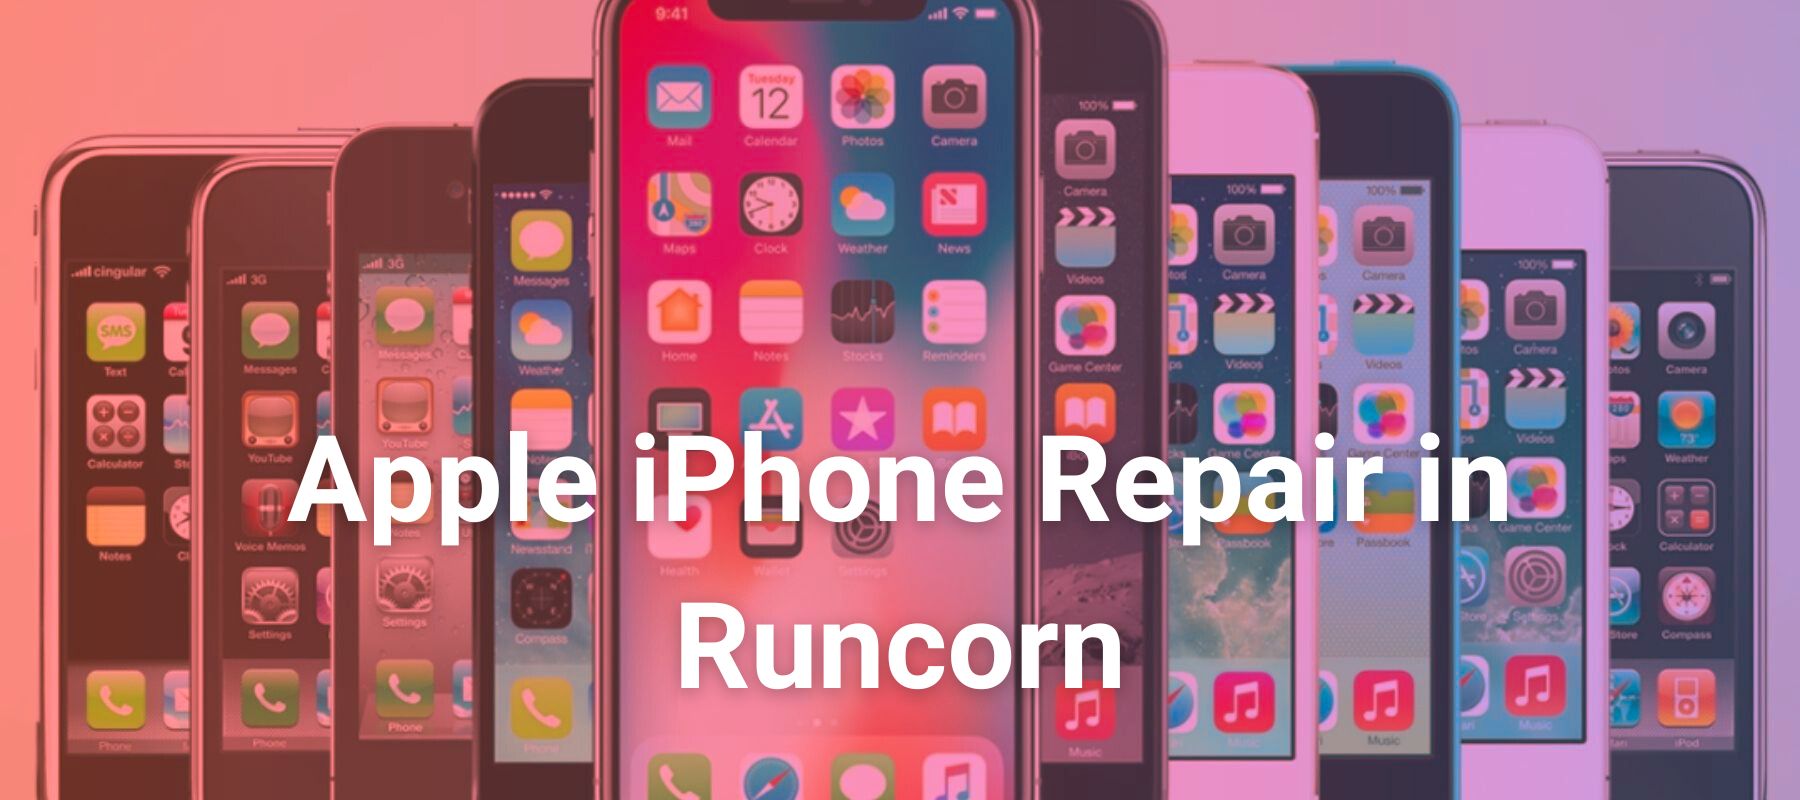 Apple iPhone Repair in Runcorn